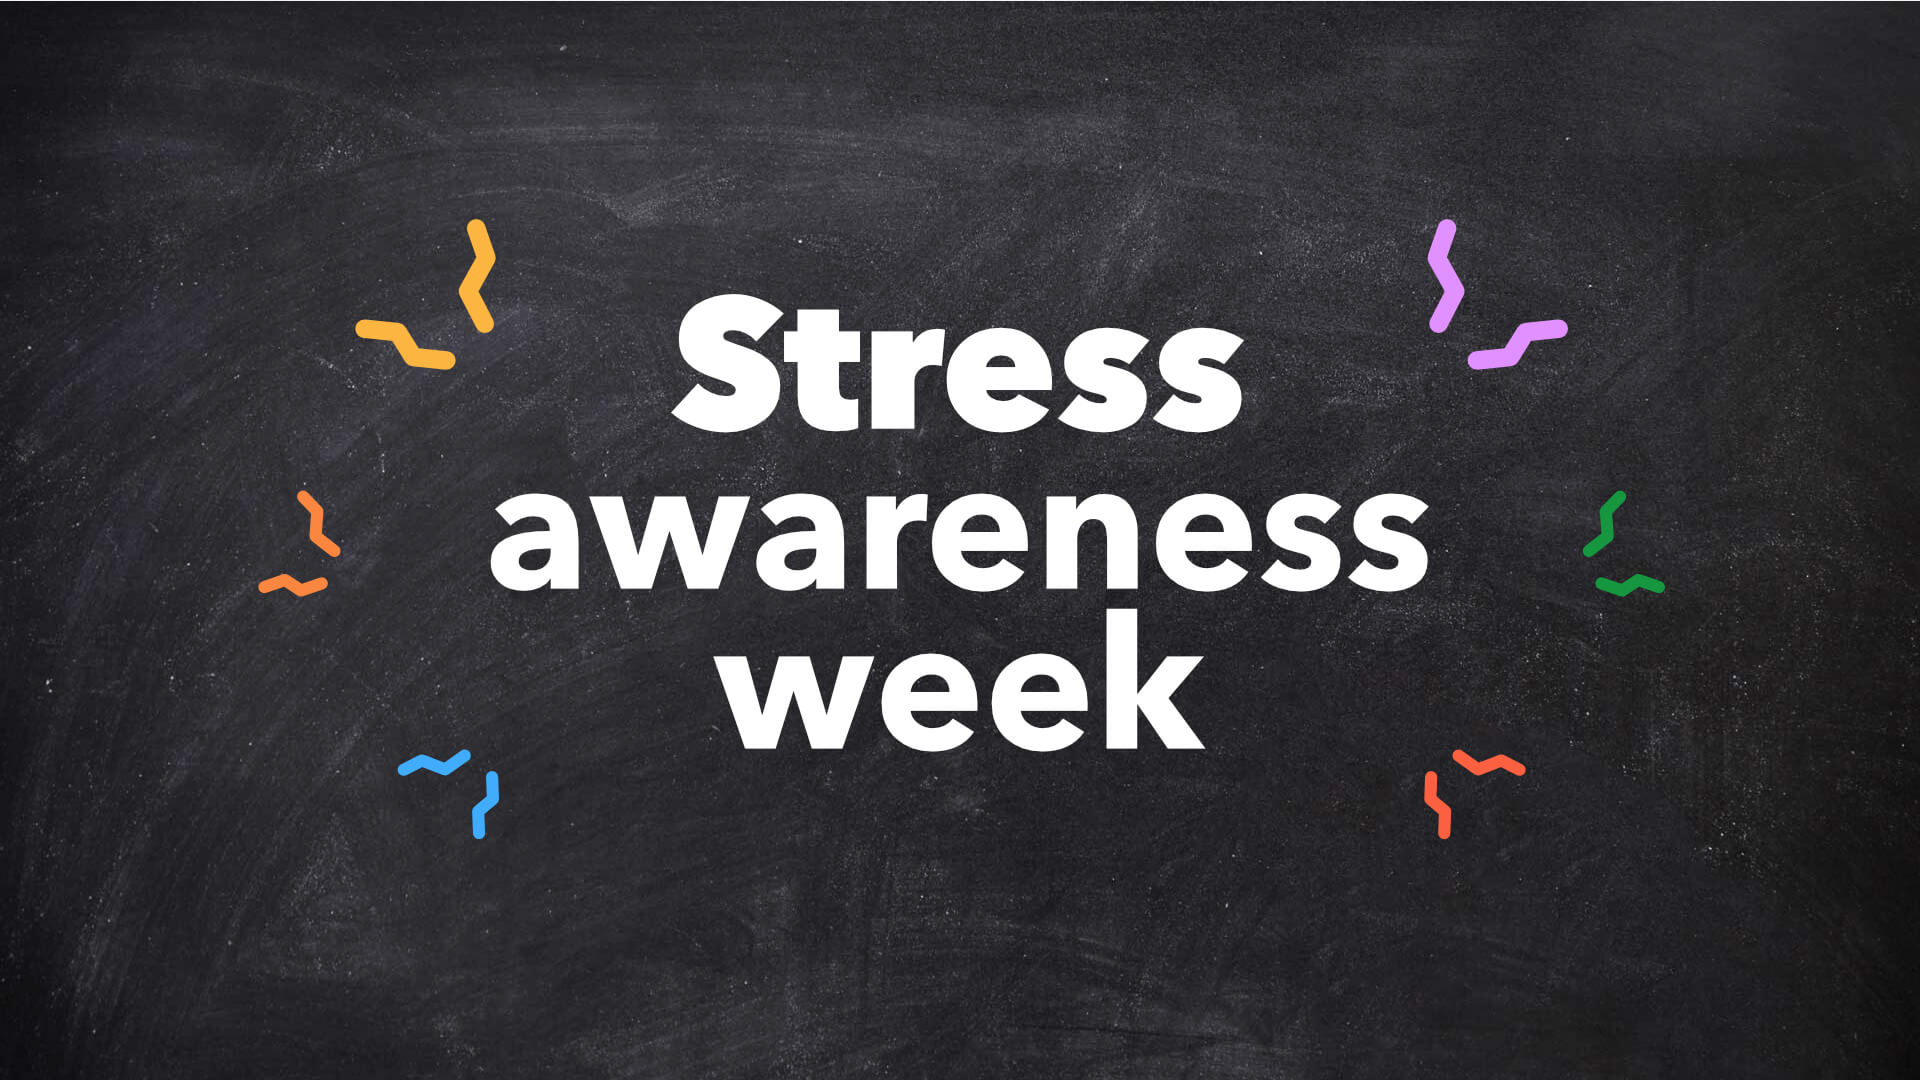 Ayoa | Stress awareness week: How to avoid burnout at work